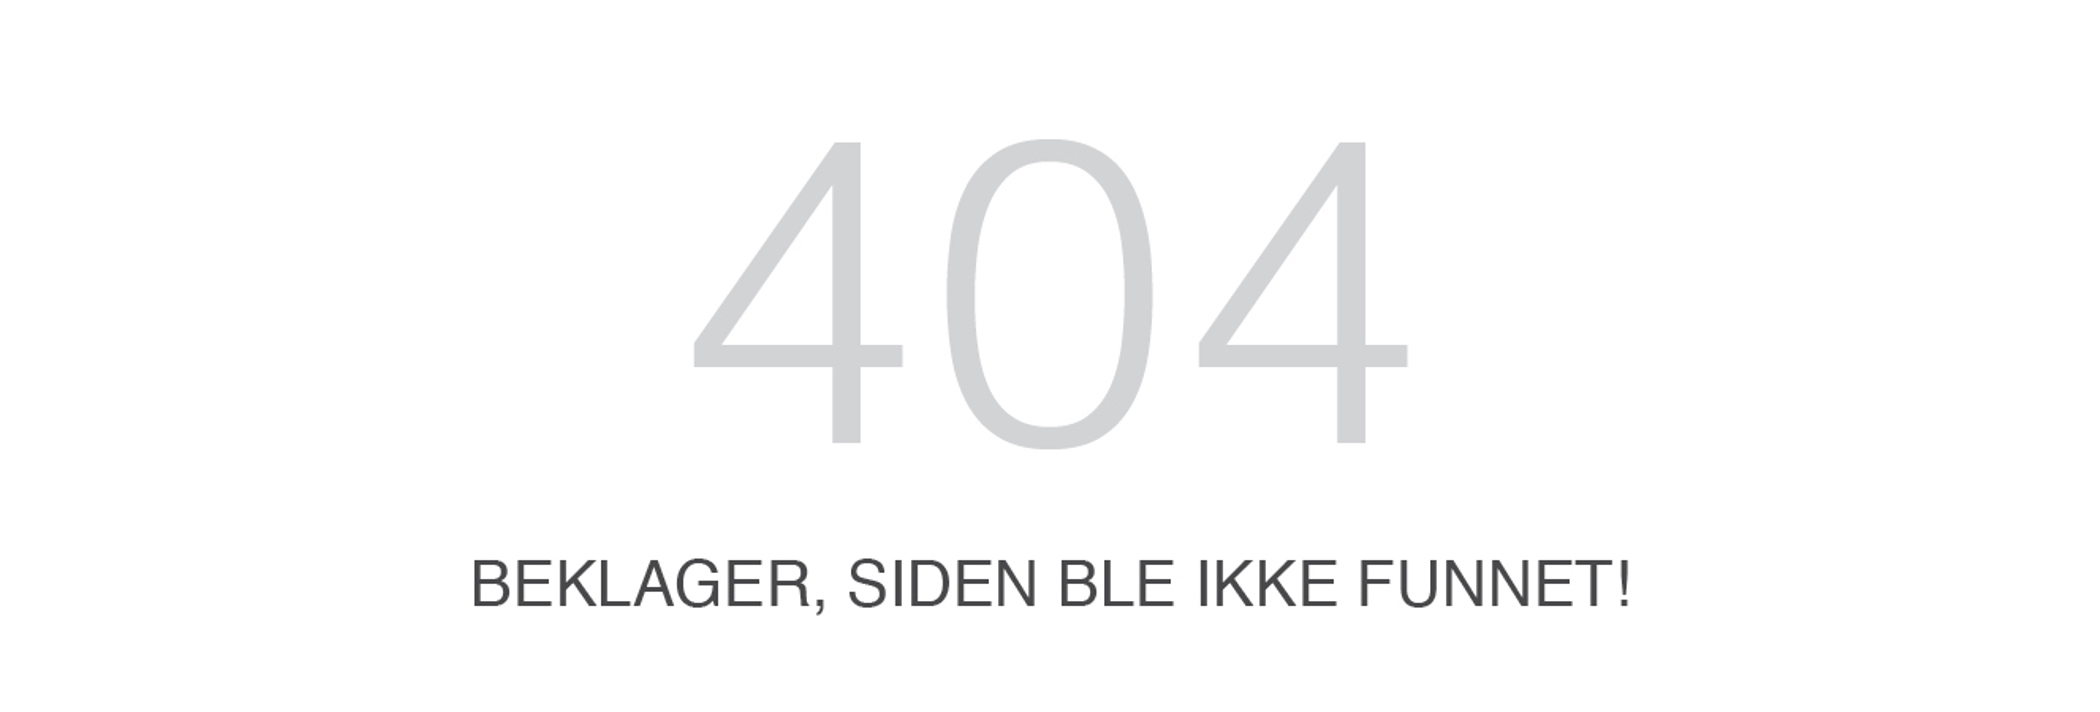 Hovedbilde 404